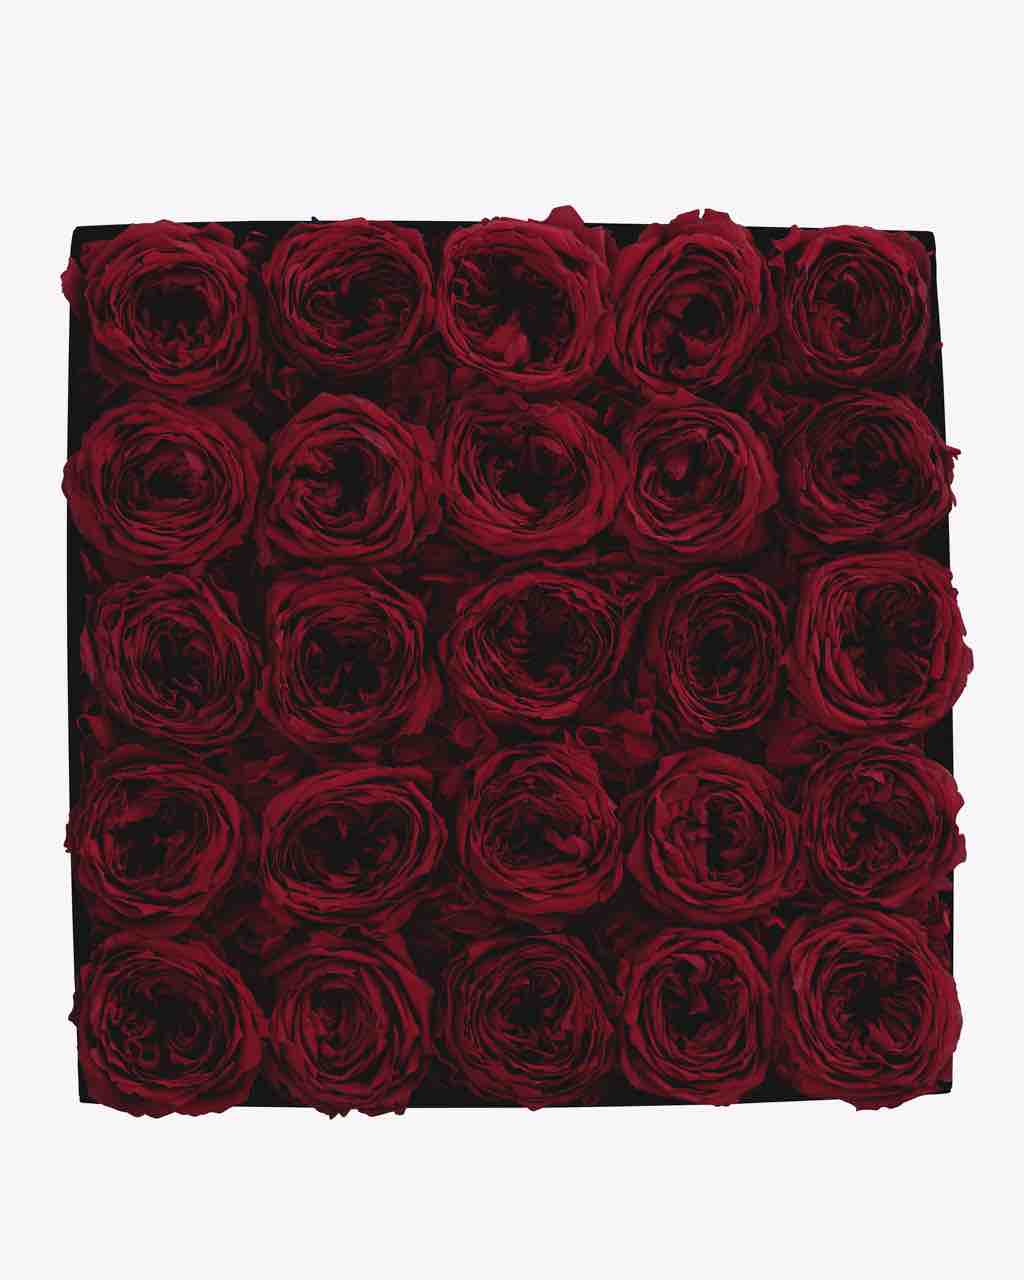 Garden Rose - Large Luxury Box